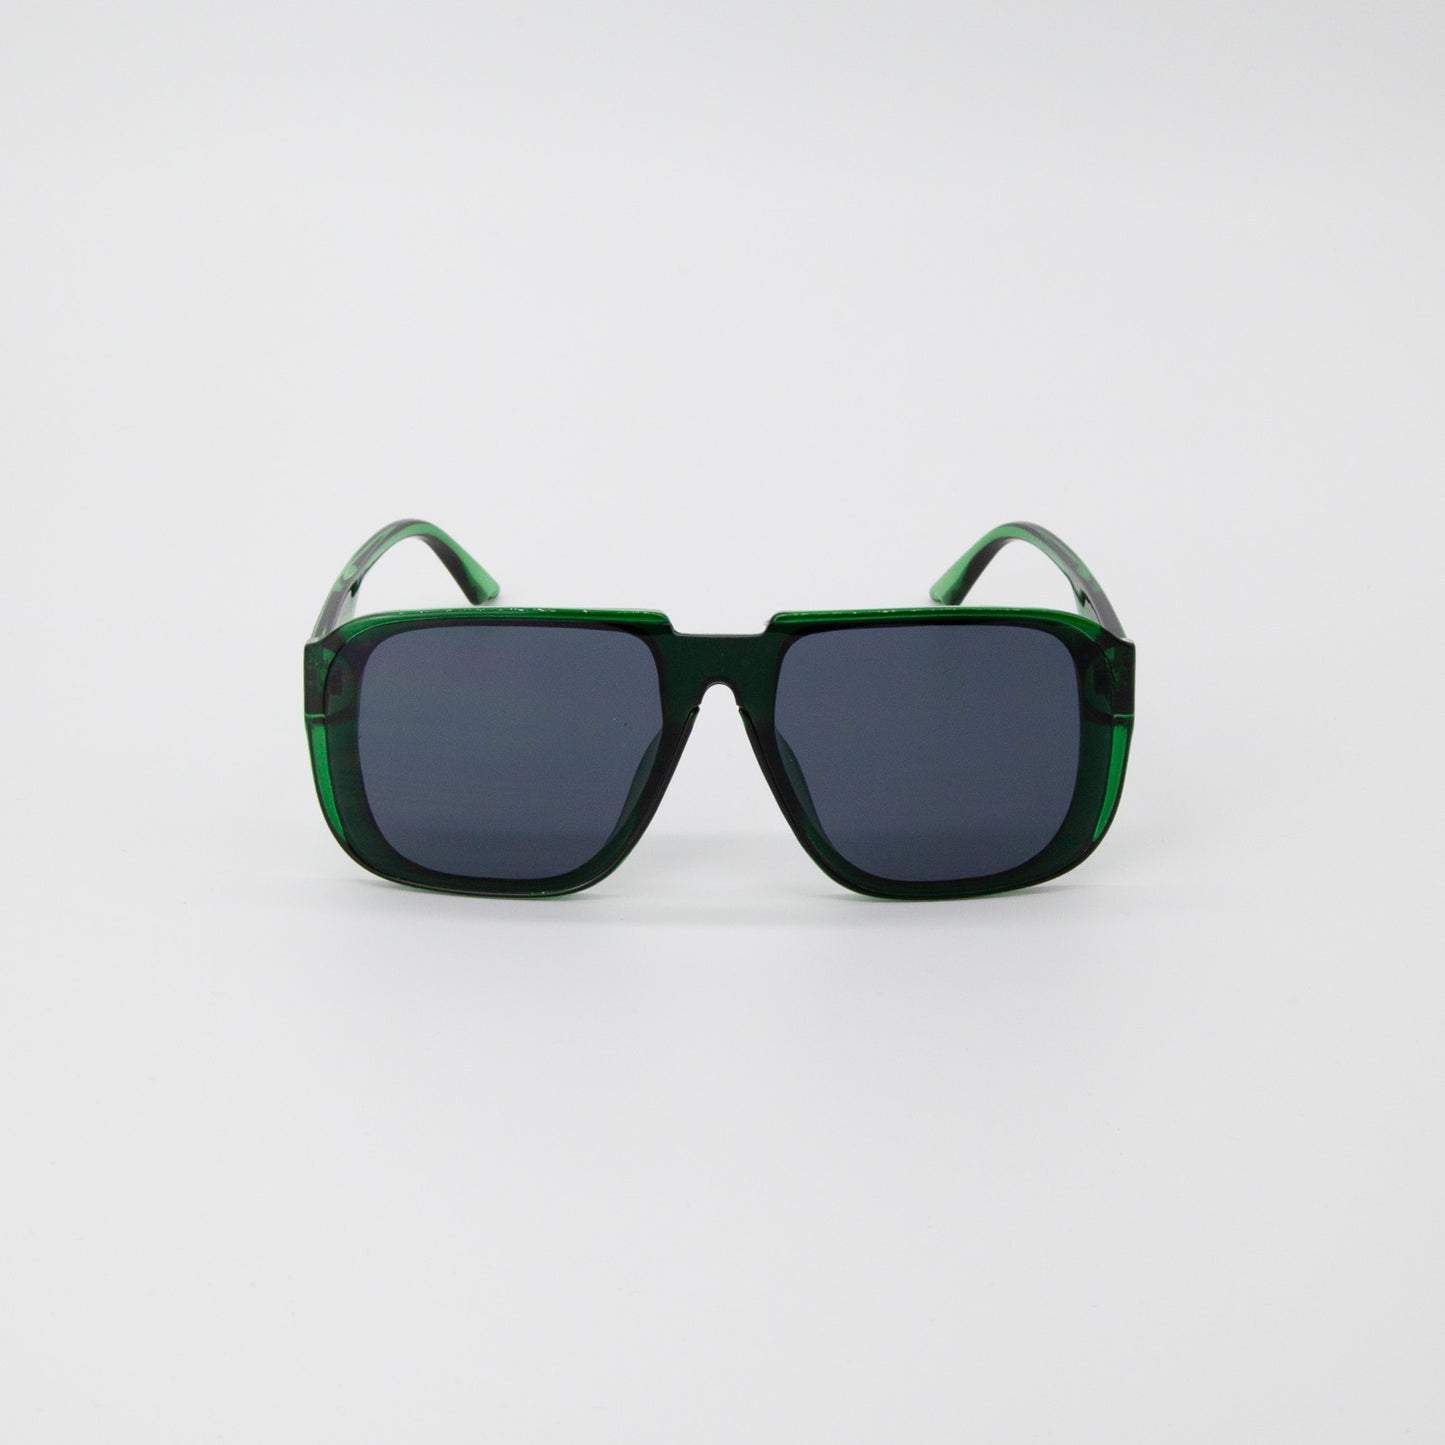 Wyatt Sunglasses in Green